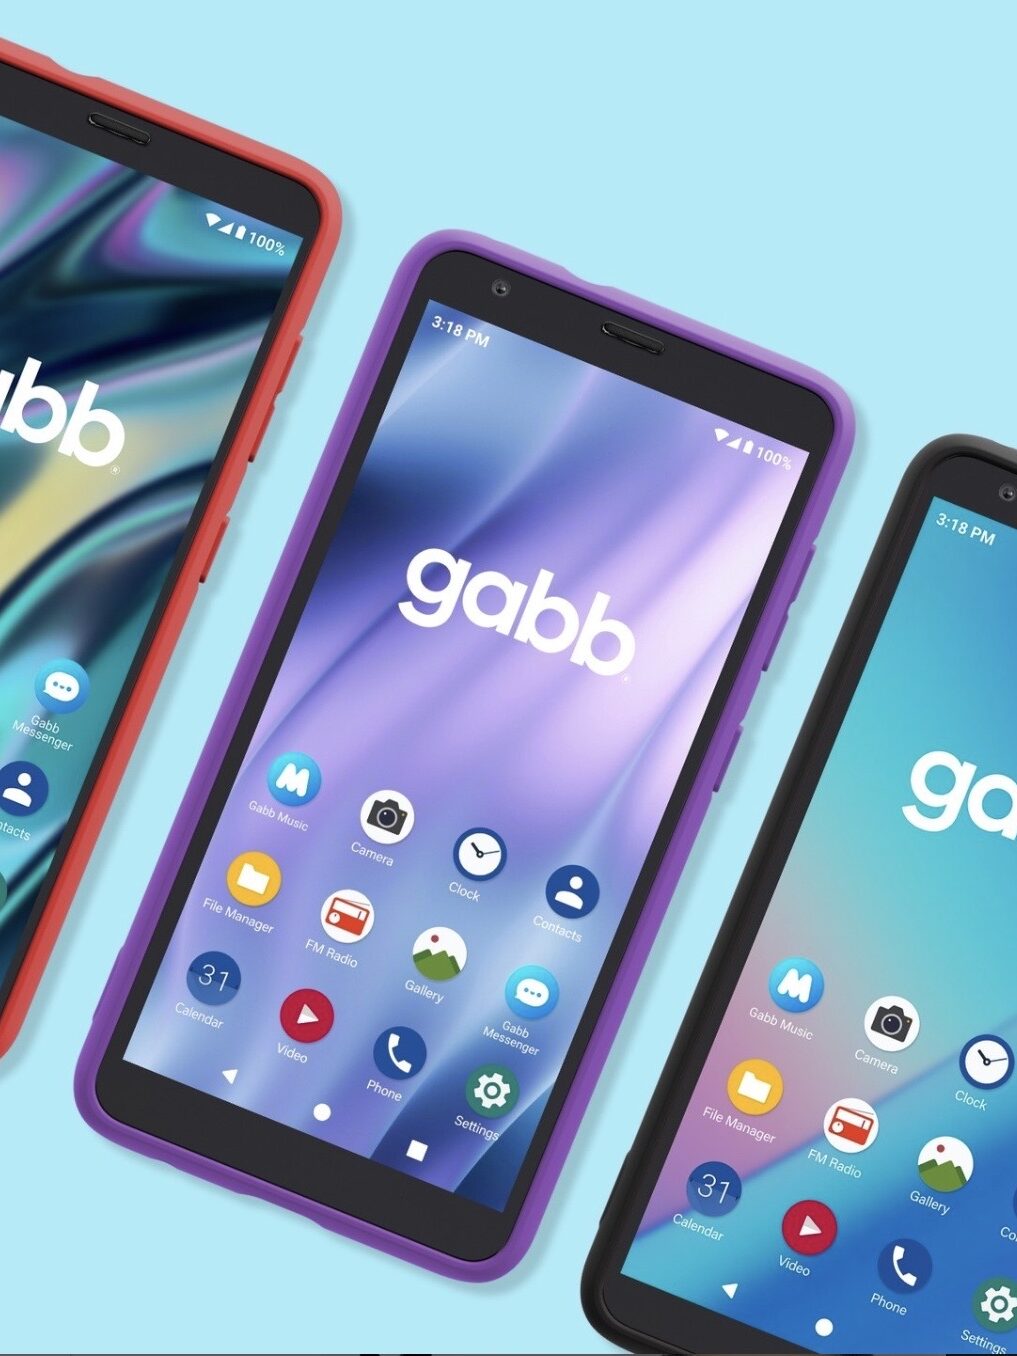 Gabb smartphone for kids